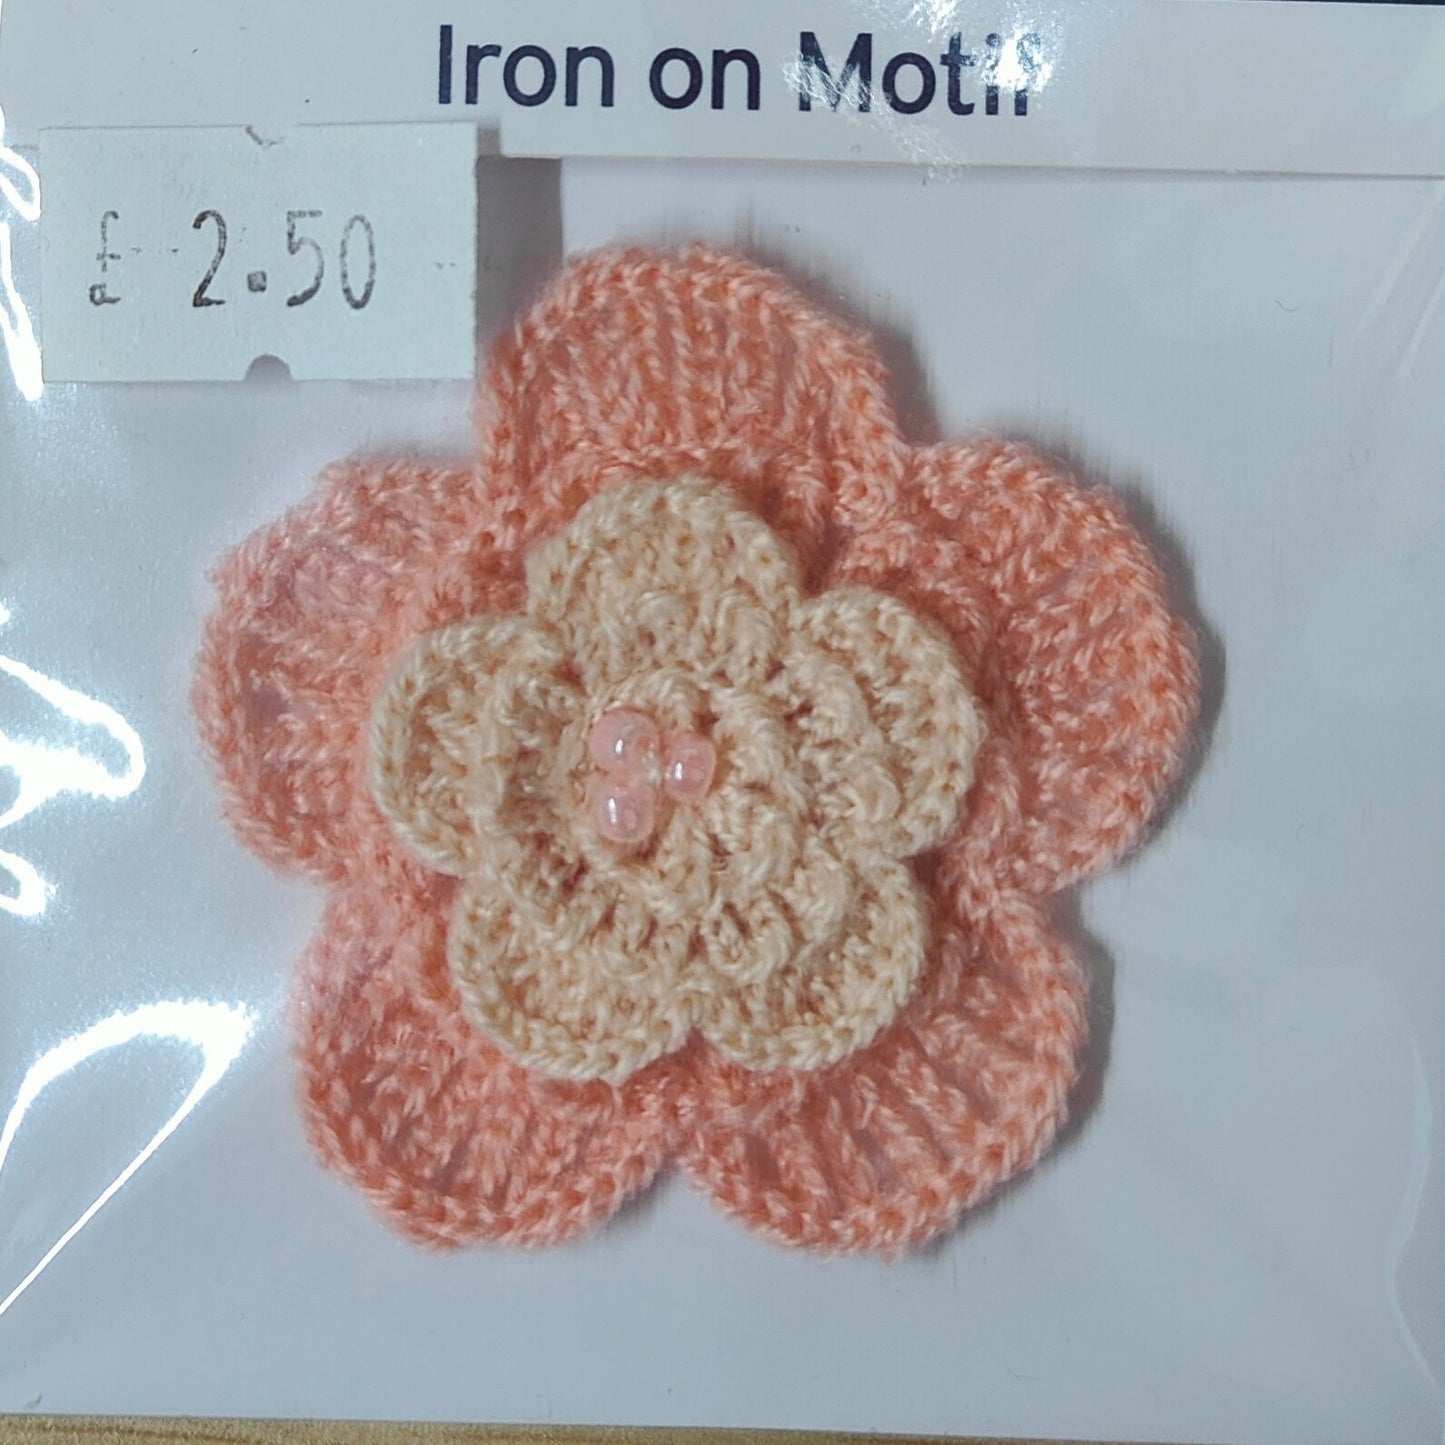 IRON ON MOTIF - Large Crochet Flower